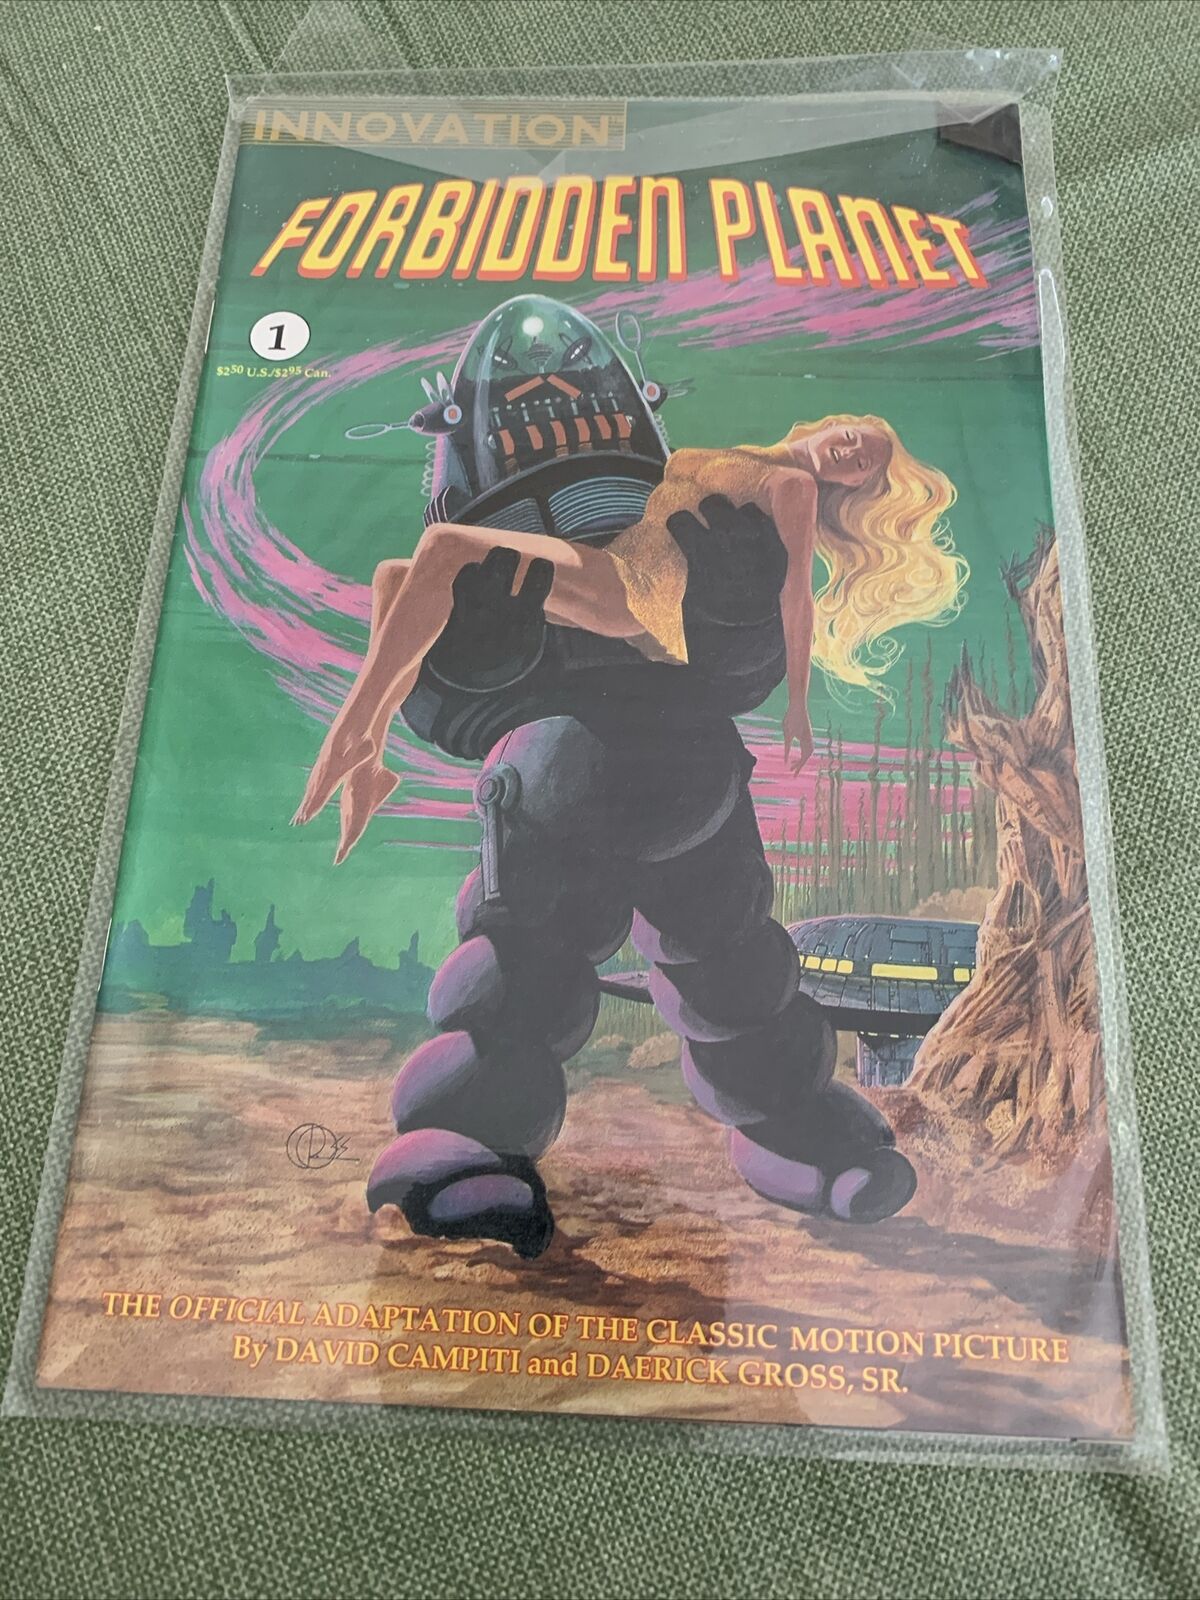 FORBIDDEN PLANET  #1 INNOVATION COMICS 1992 ROBBIE THE ROBOT  Unread